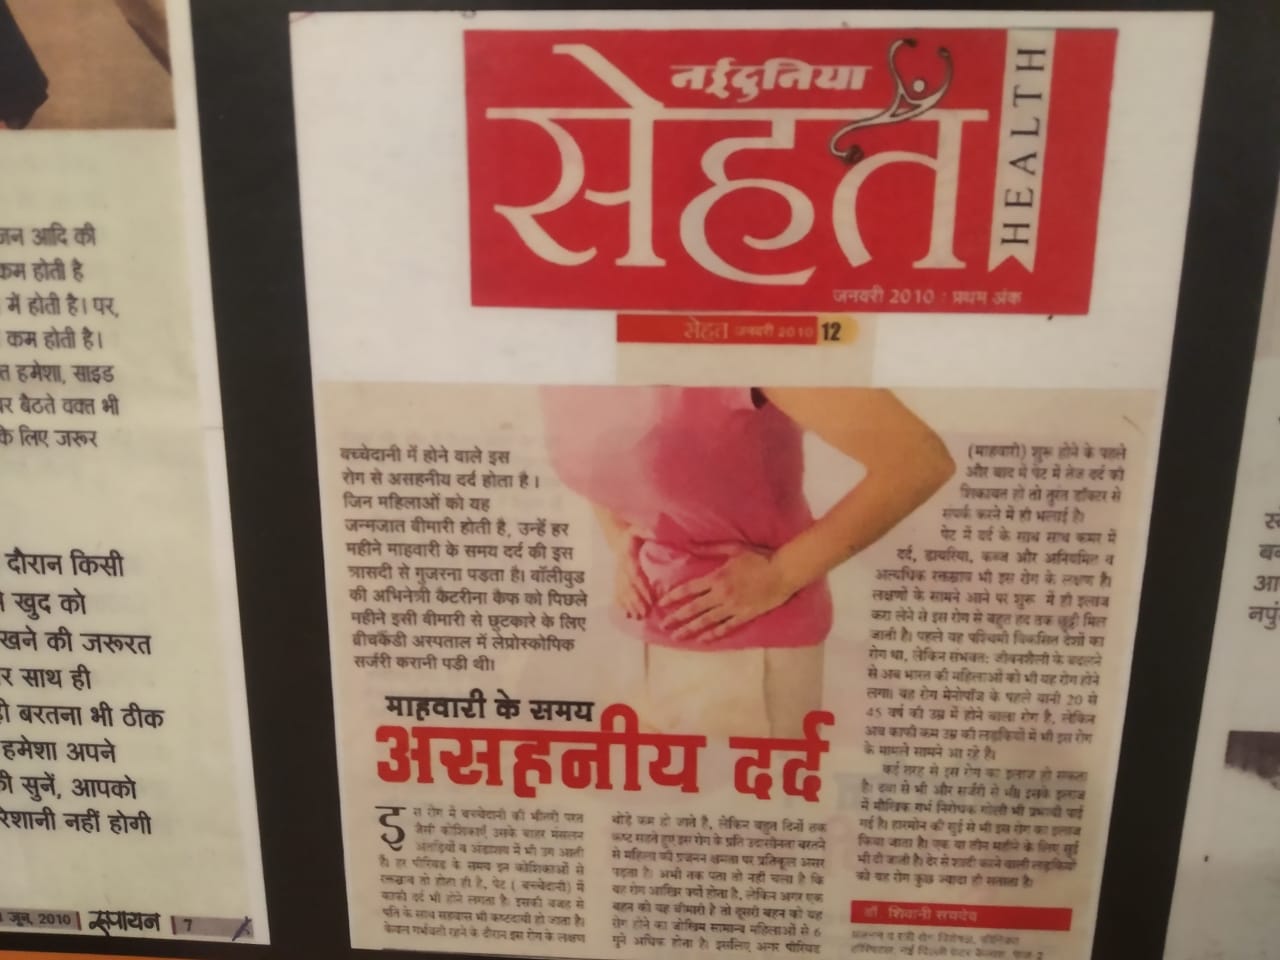 unbearable pain during menstruation - dr shivani sachdev gour